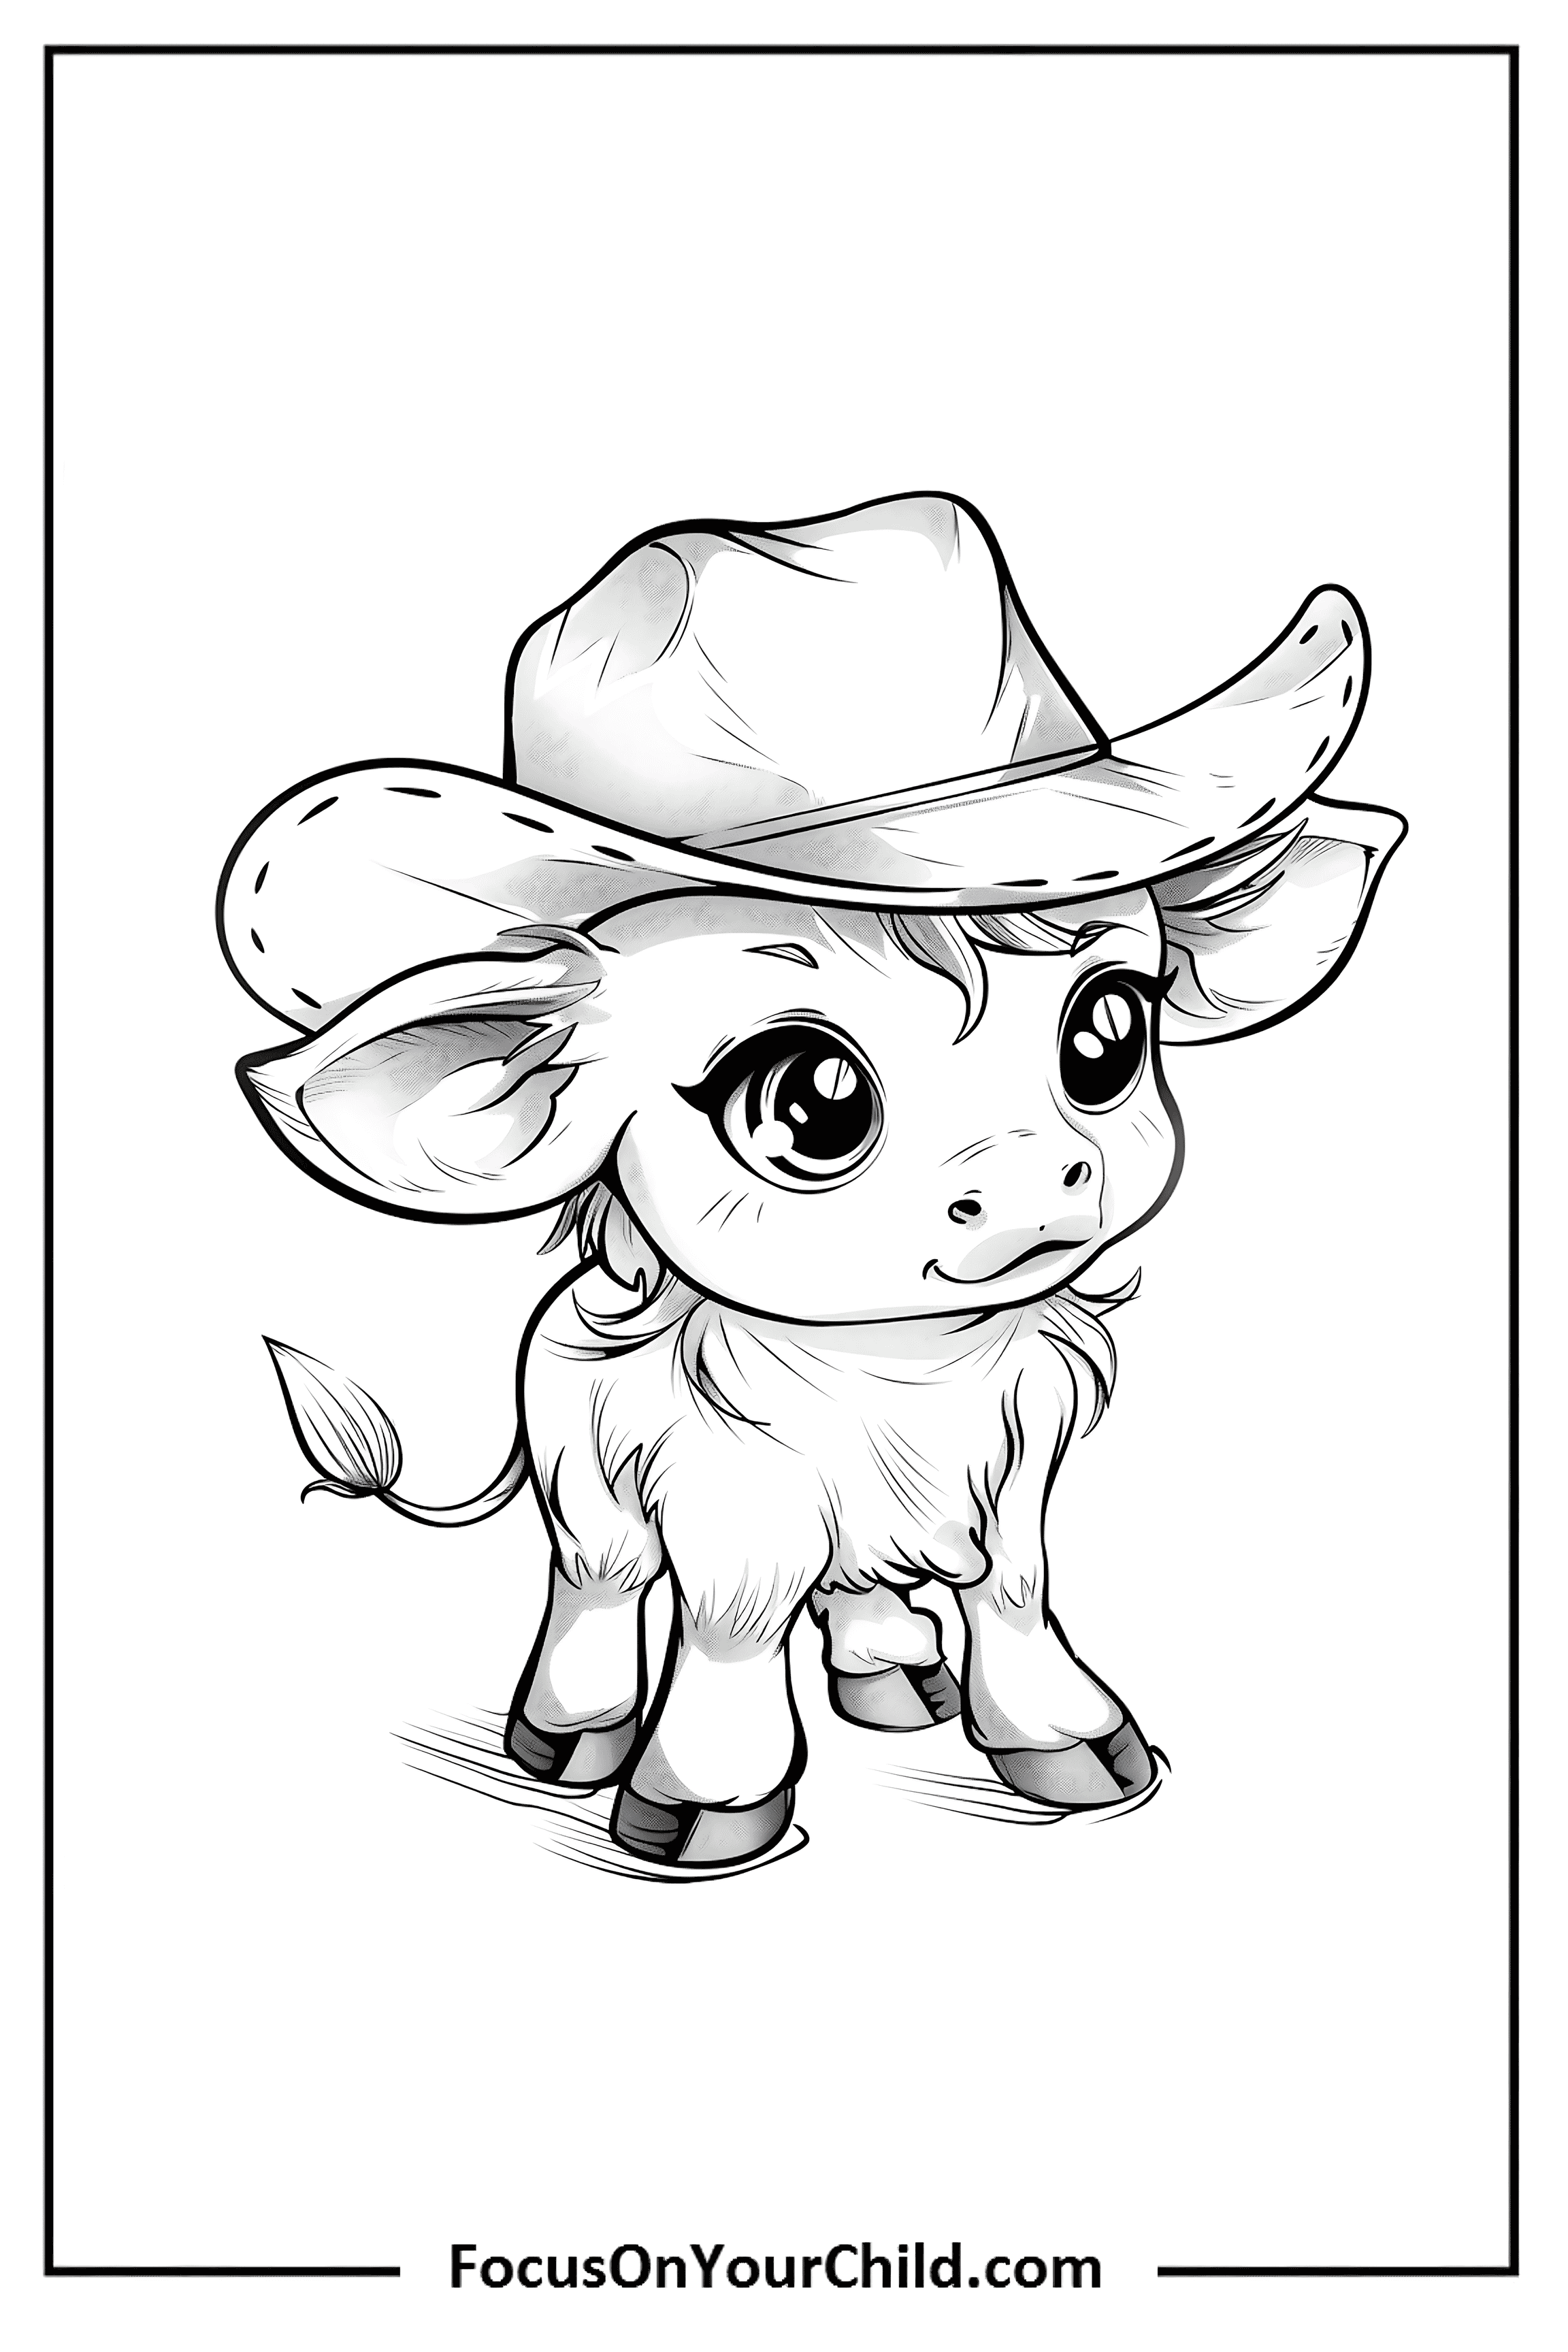 Adorable cartoon calf wearing cowboy hat on FocusOnYourChild.com.